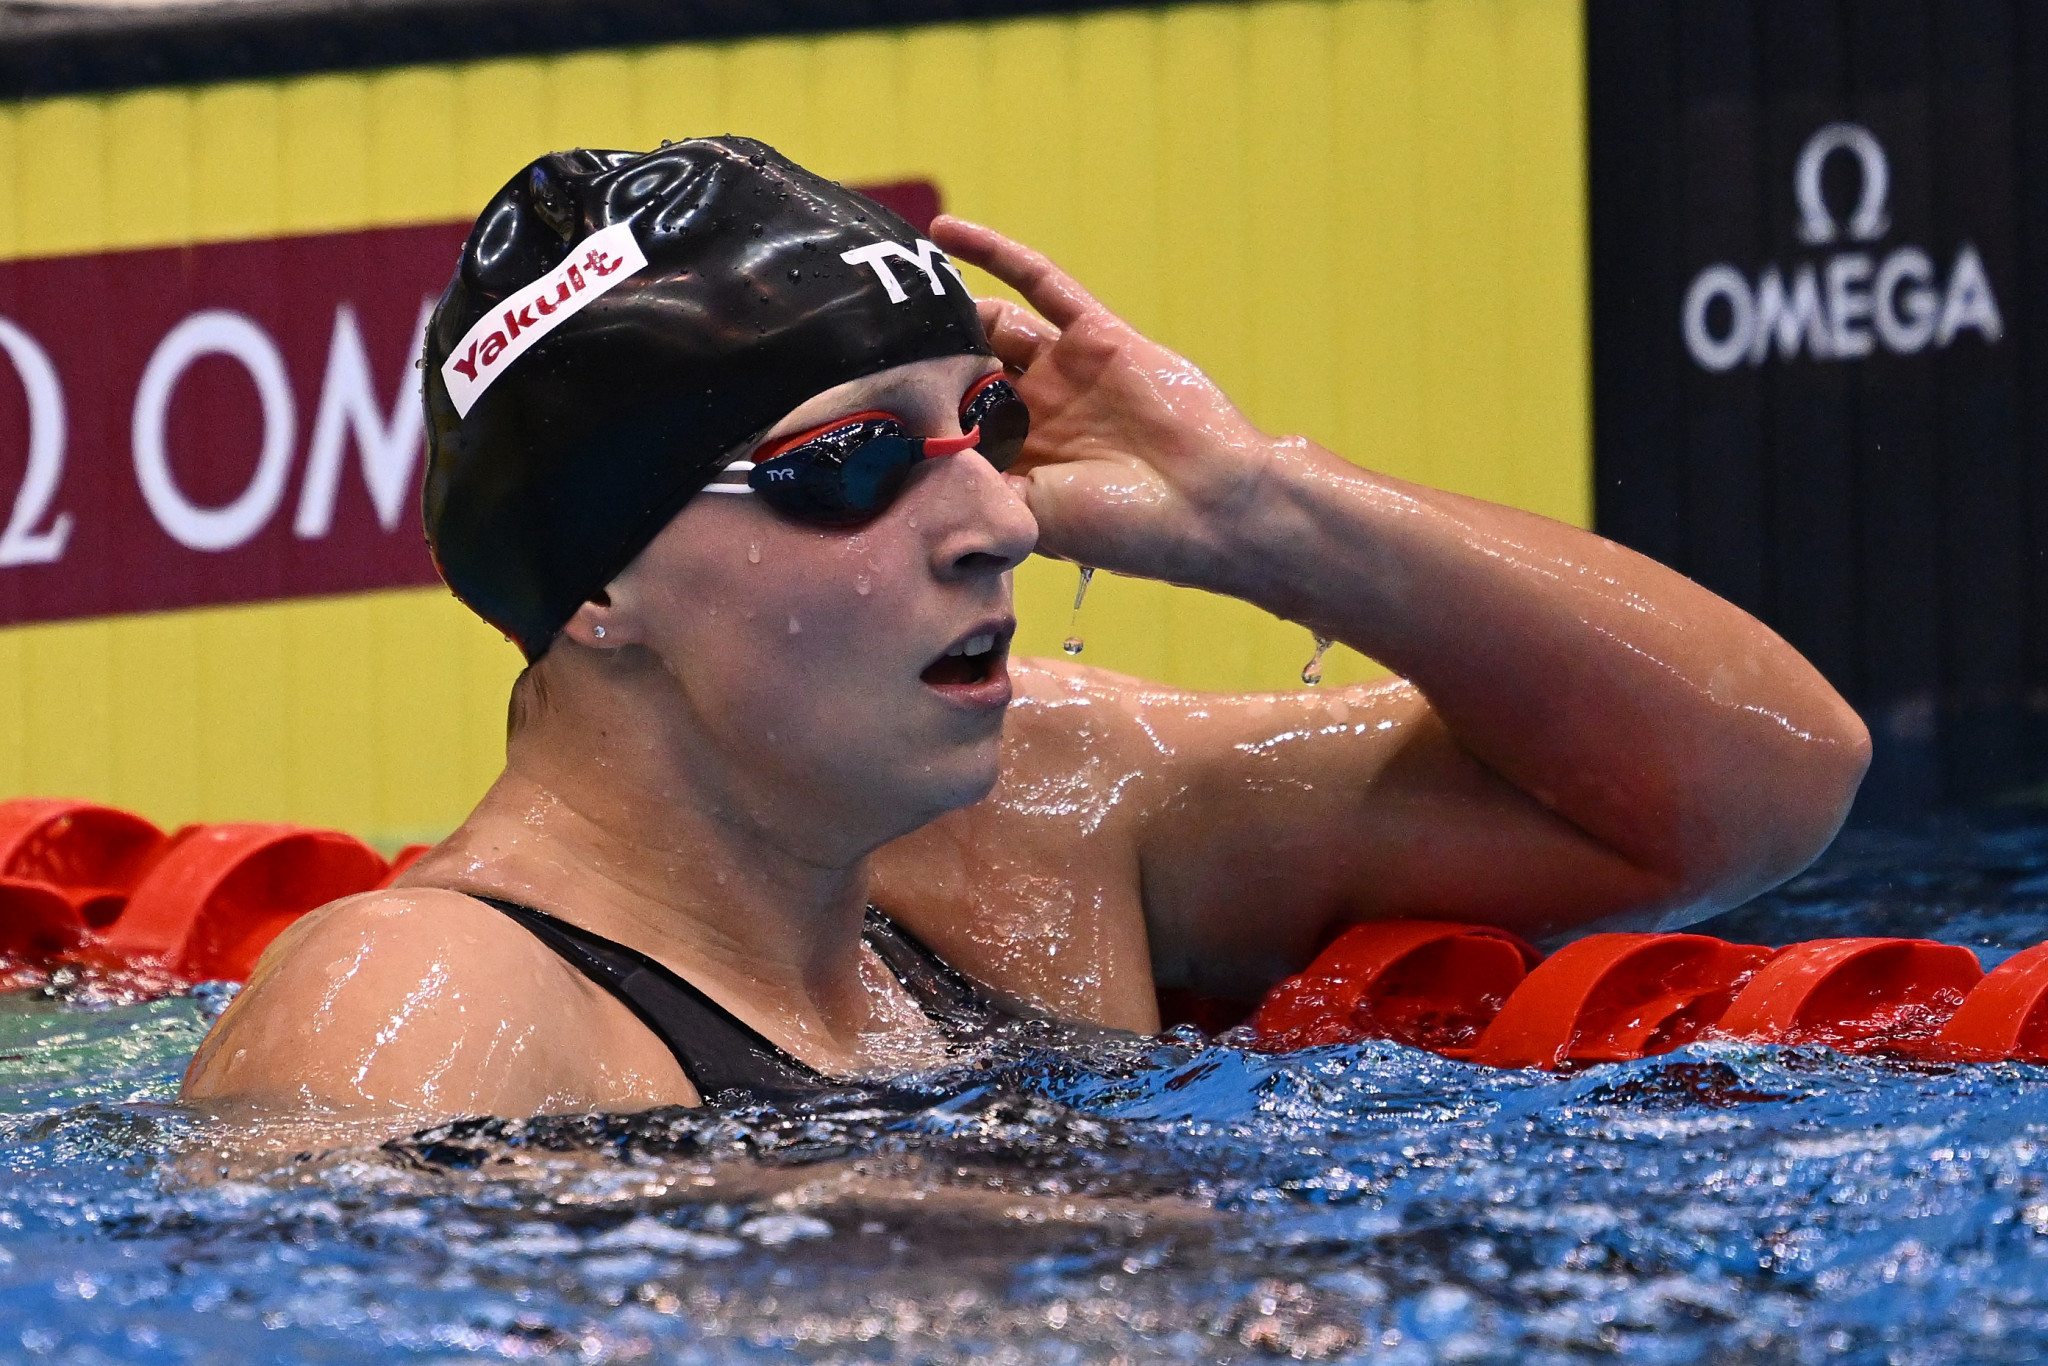 Ledecky equals Phelps' individual gold medal record at World Aquatics Championships